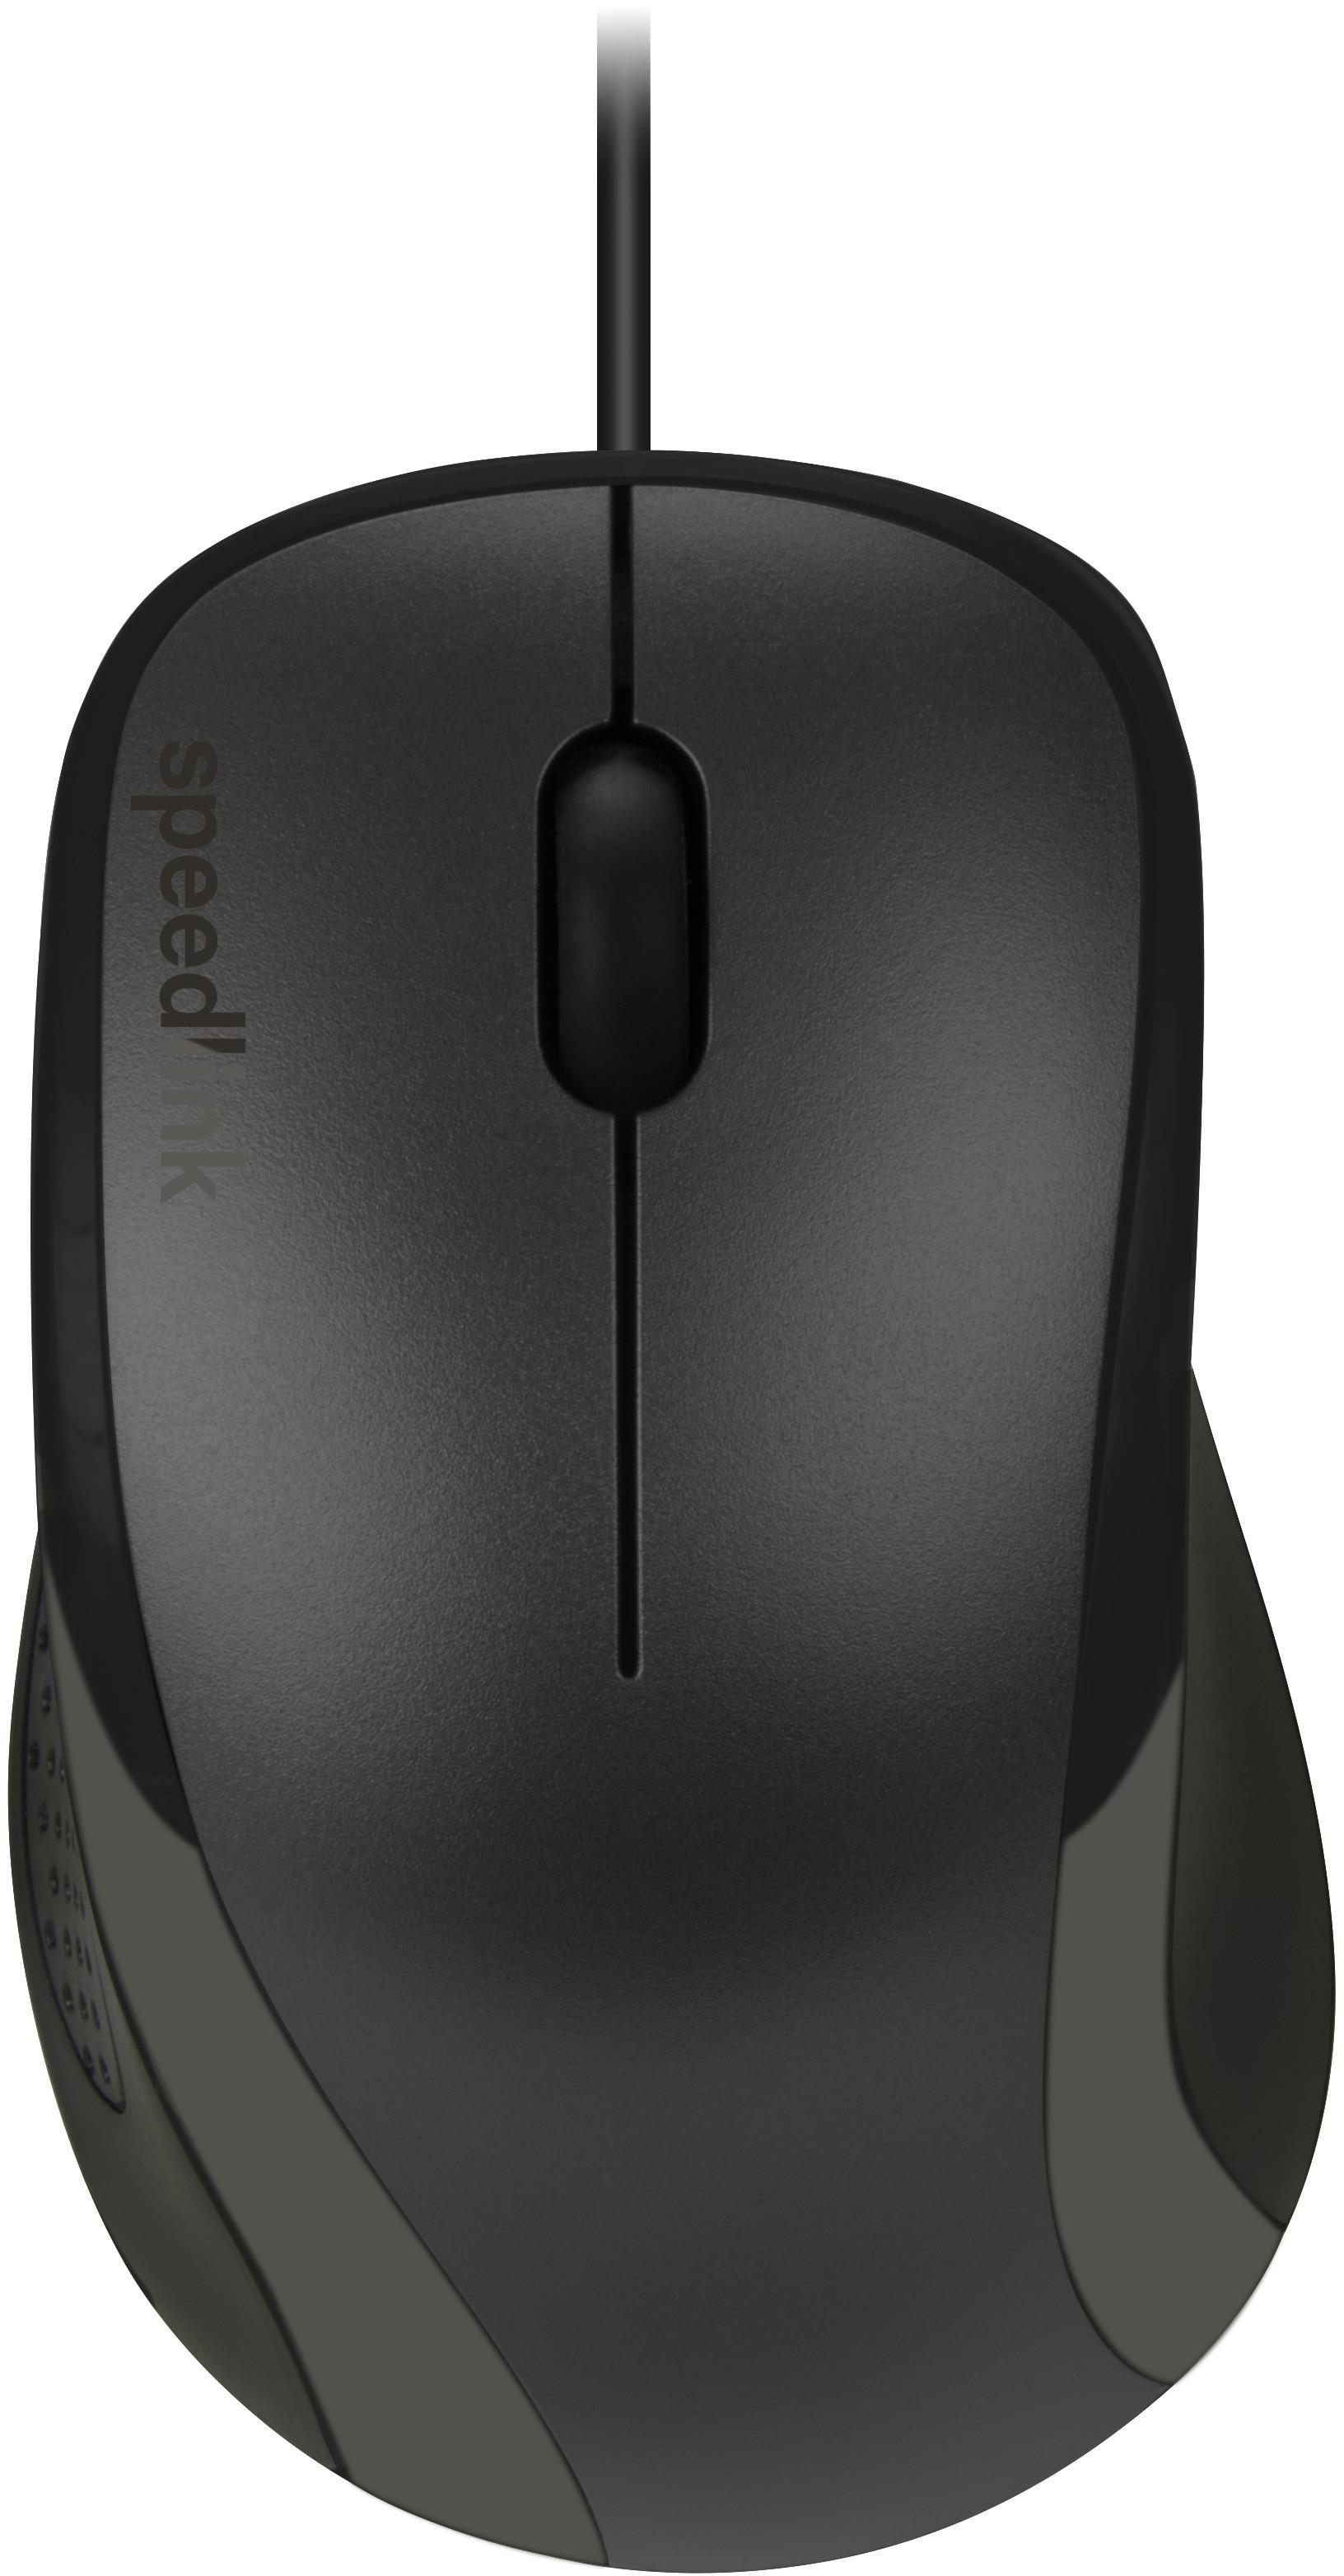 Speedlink mouse Kappa USB, black (SL-610011-BK)